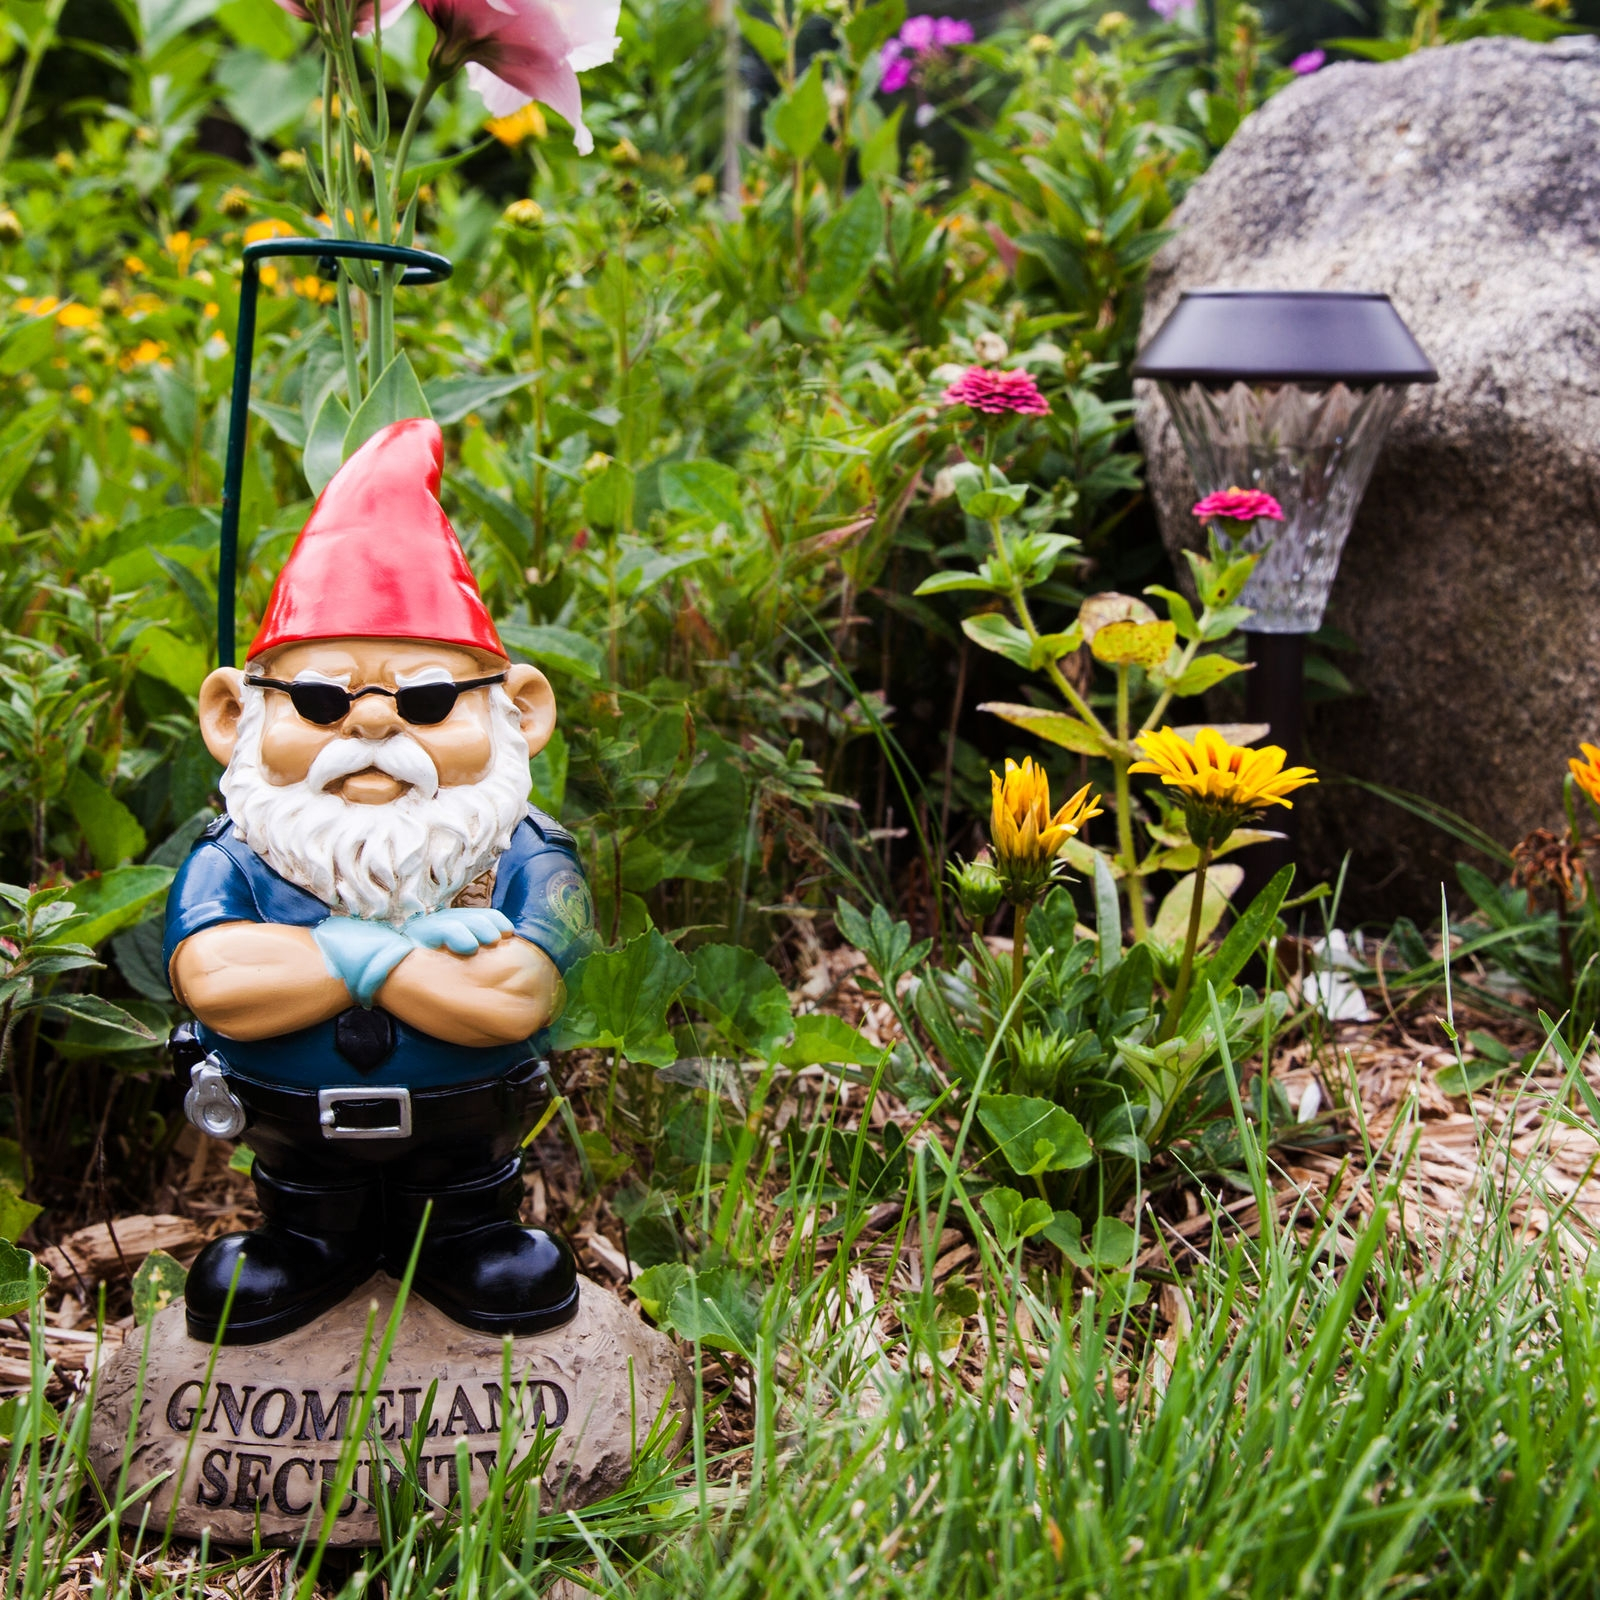 Gnomeland Security- puutarhatonttu